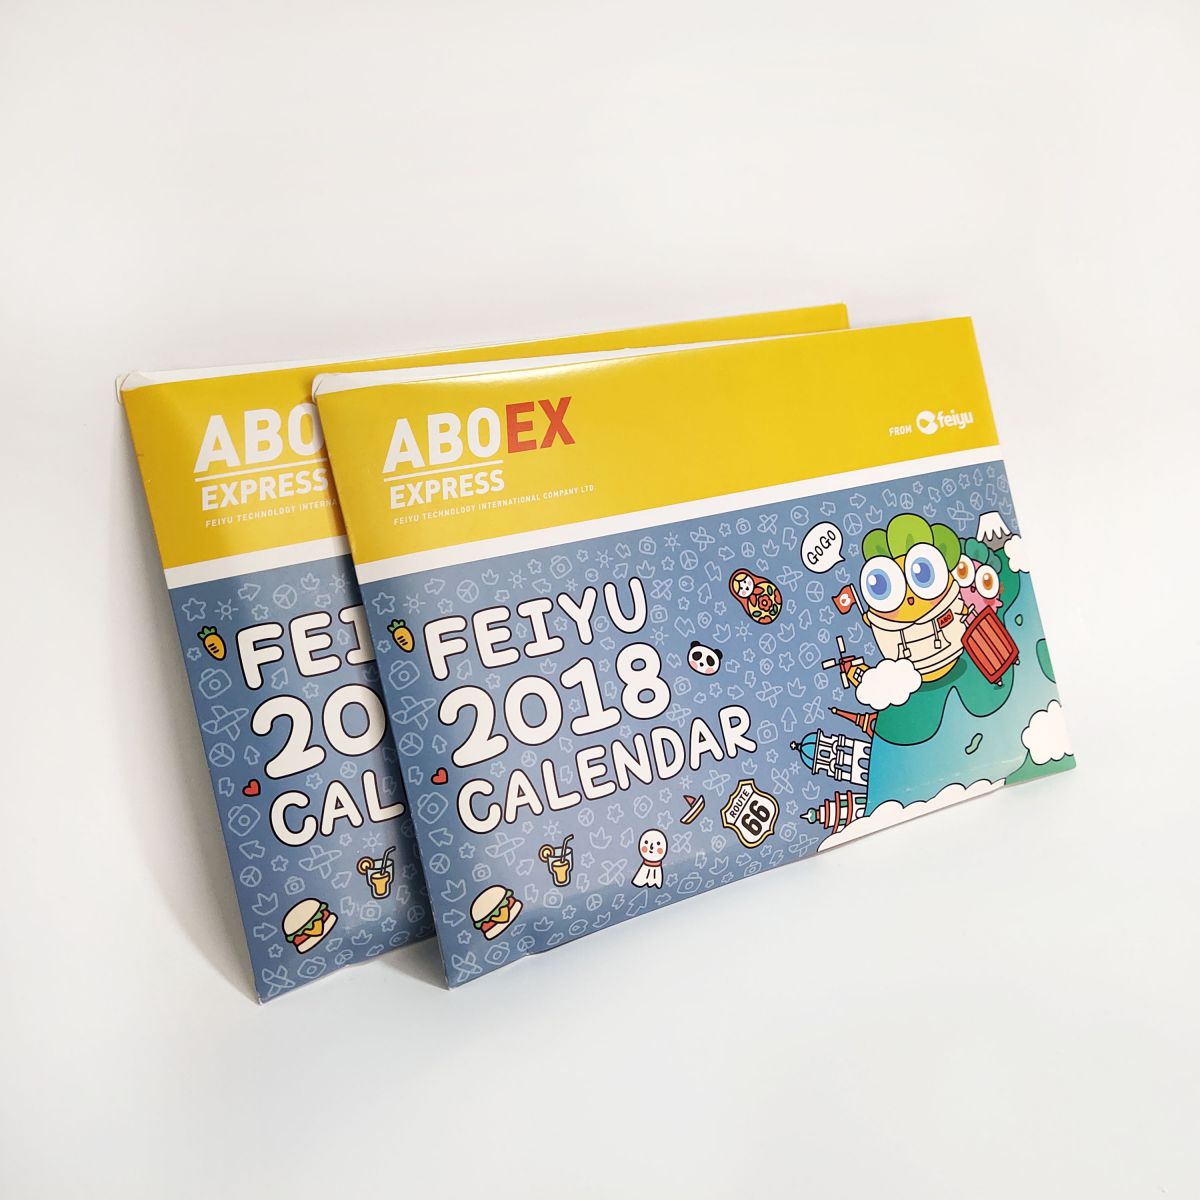 Printed Desk Calendar - Customized Company Calendar